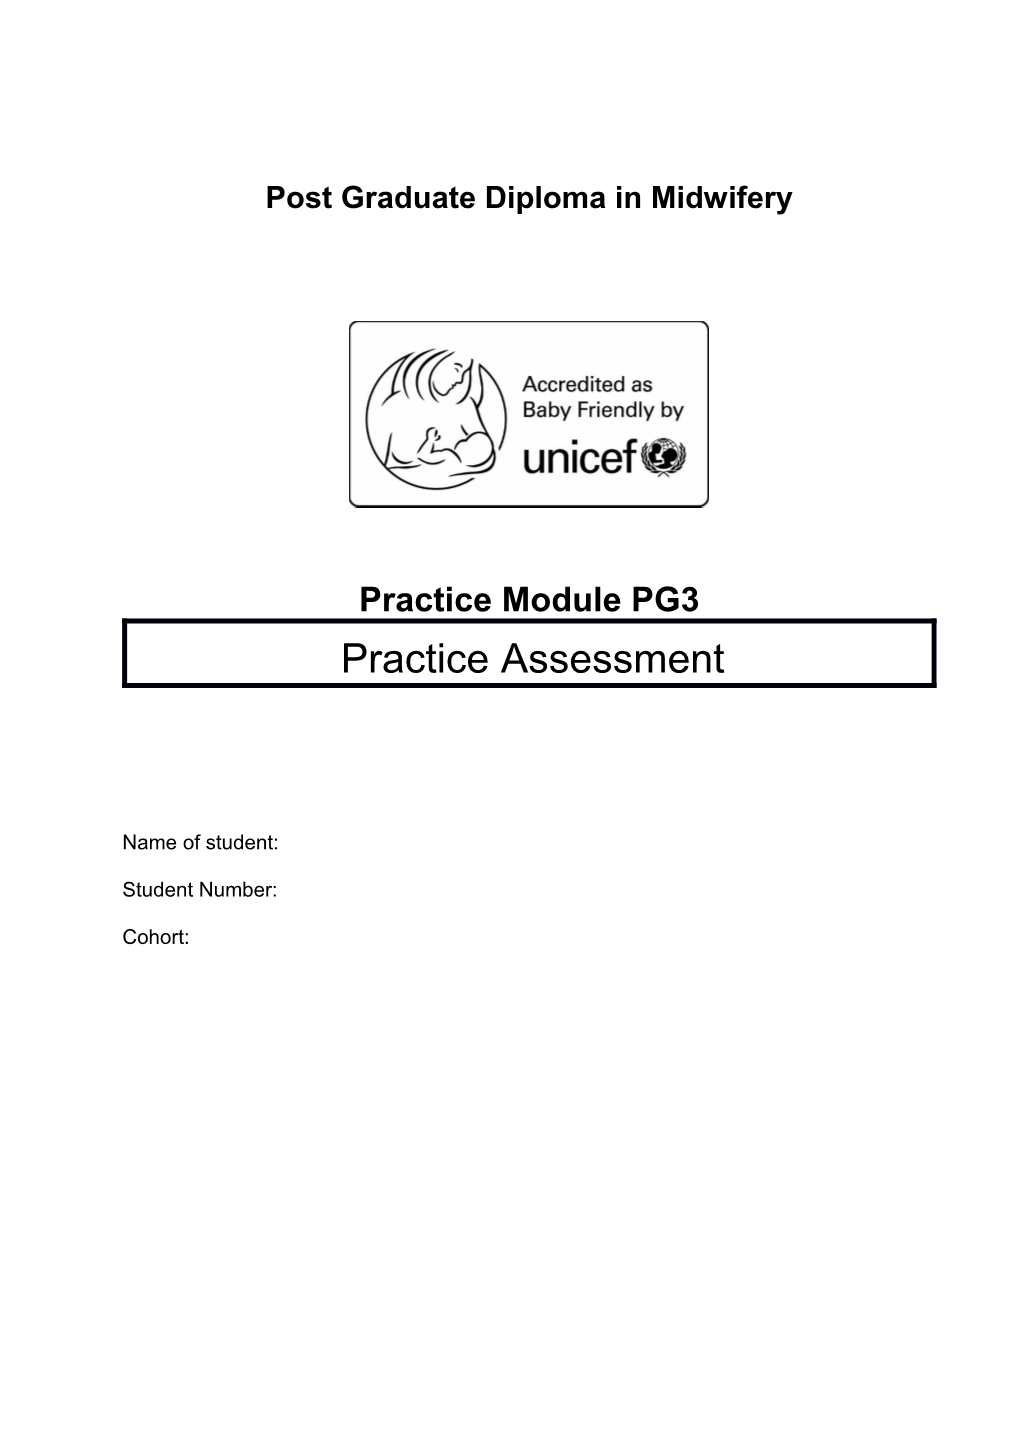 Midwifery Practice Module PG3 - Practice Assessment Document